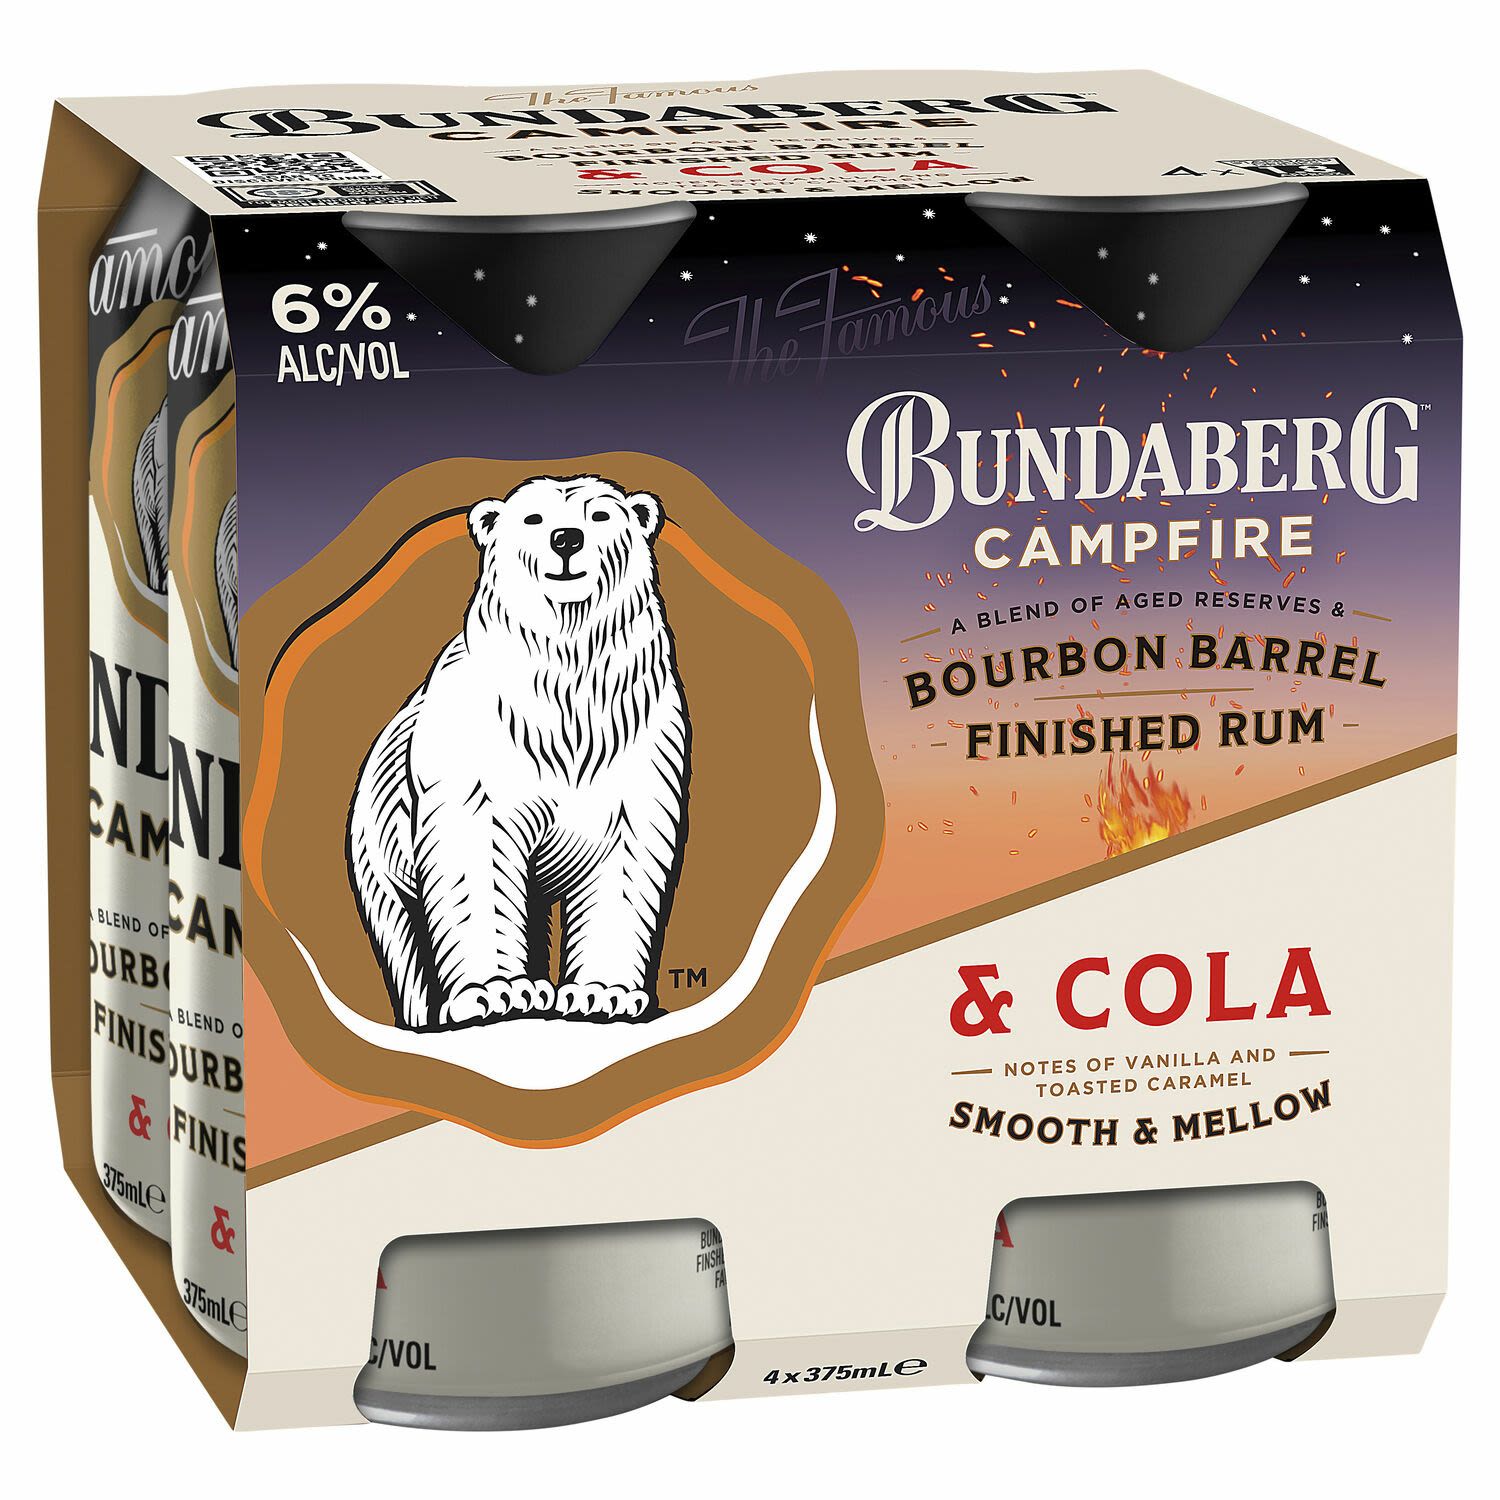 Bundaberg Campfire Rum & Cola 6% Can 375mL 4 Pack